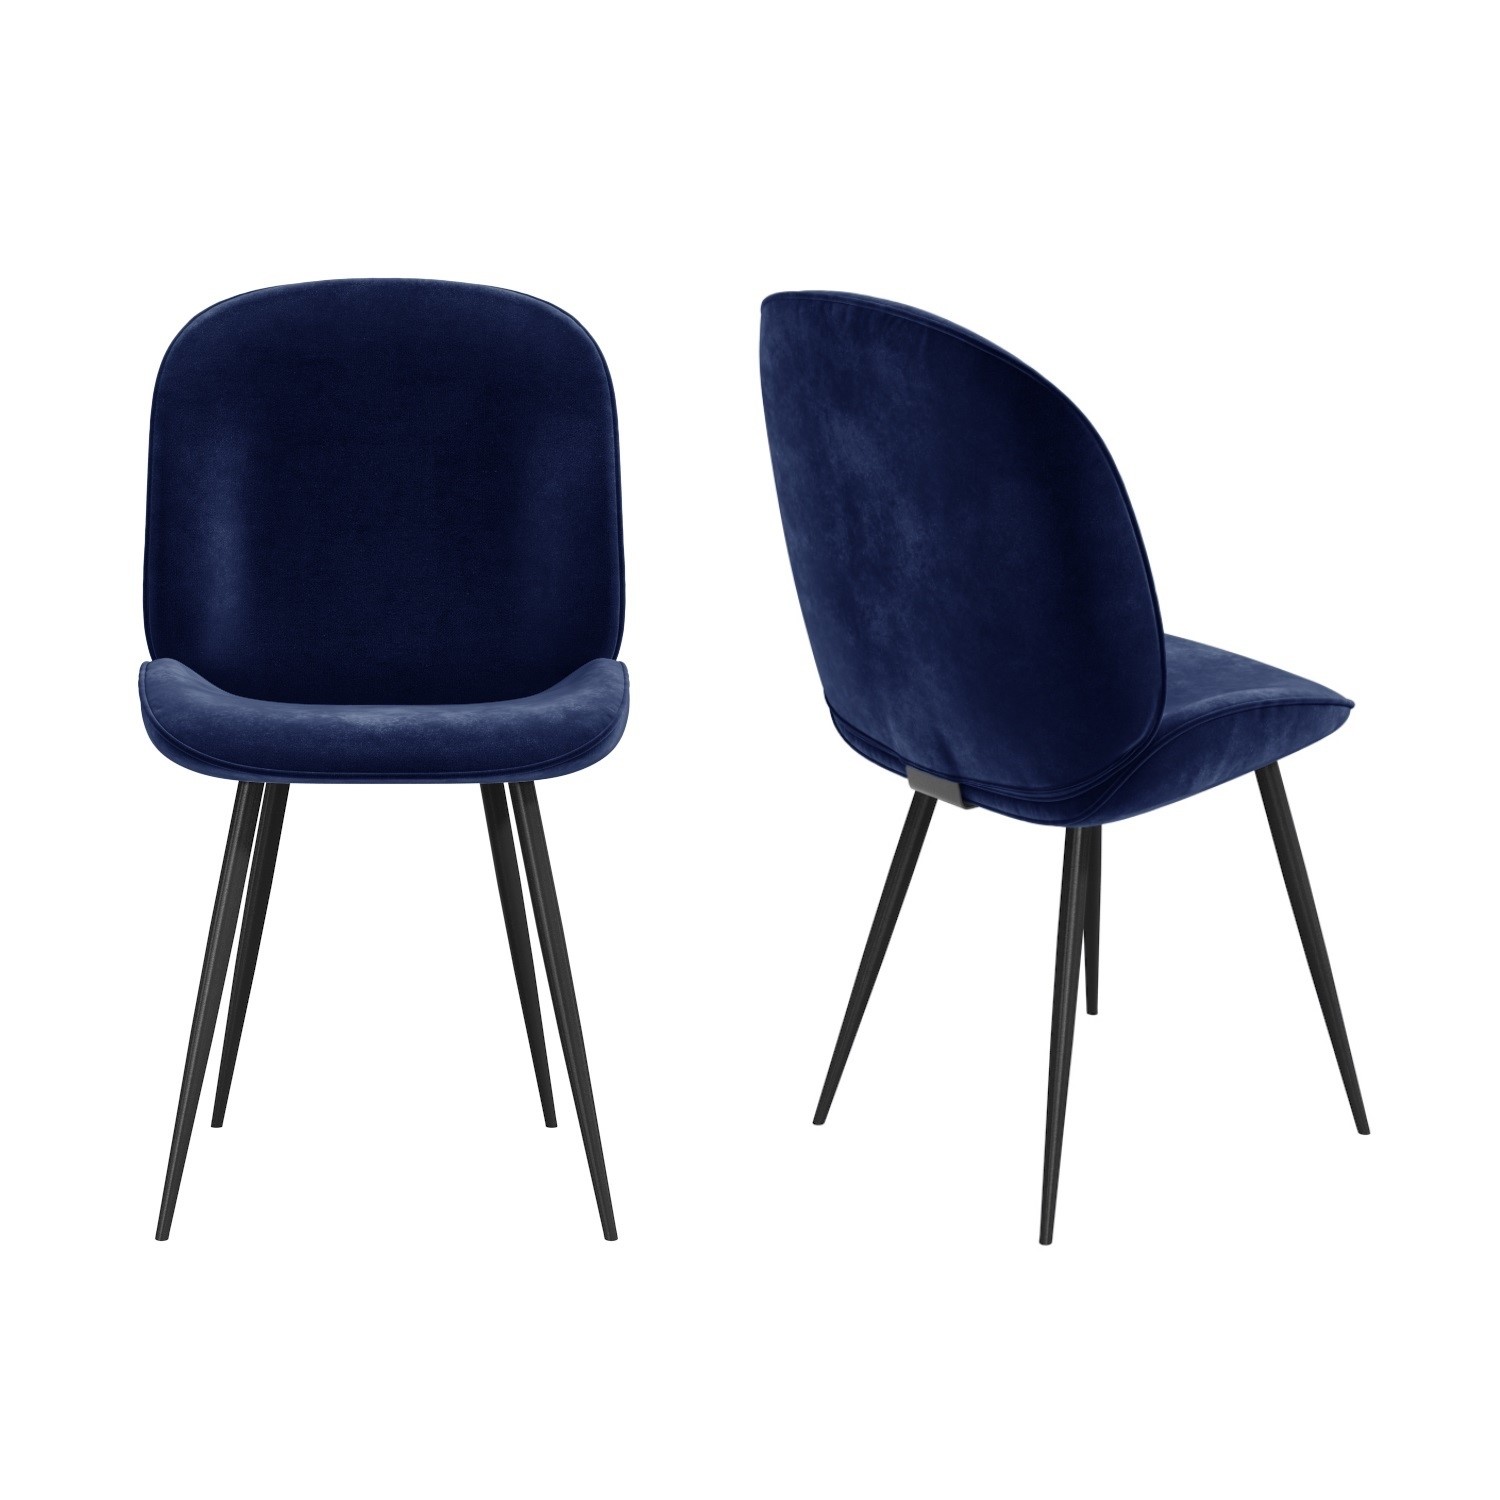 Set Of 2 Navy Blue Velvet Dining Chairs, Dark Blue Dining Chairs Uk